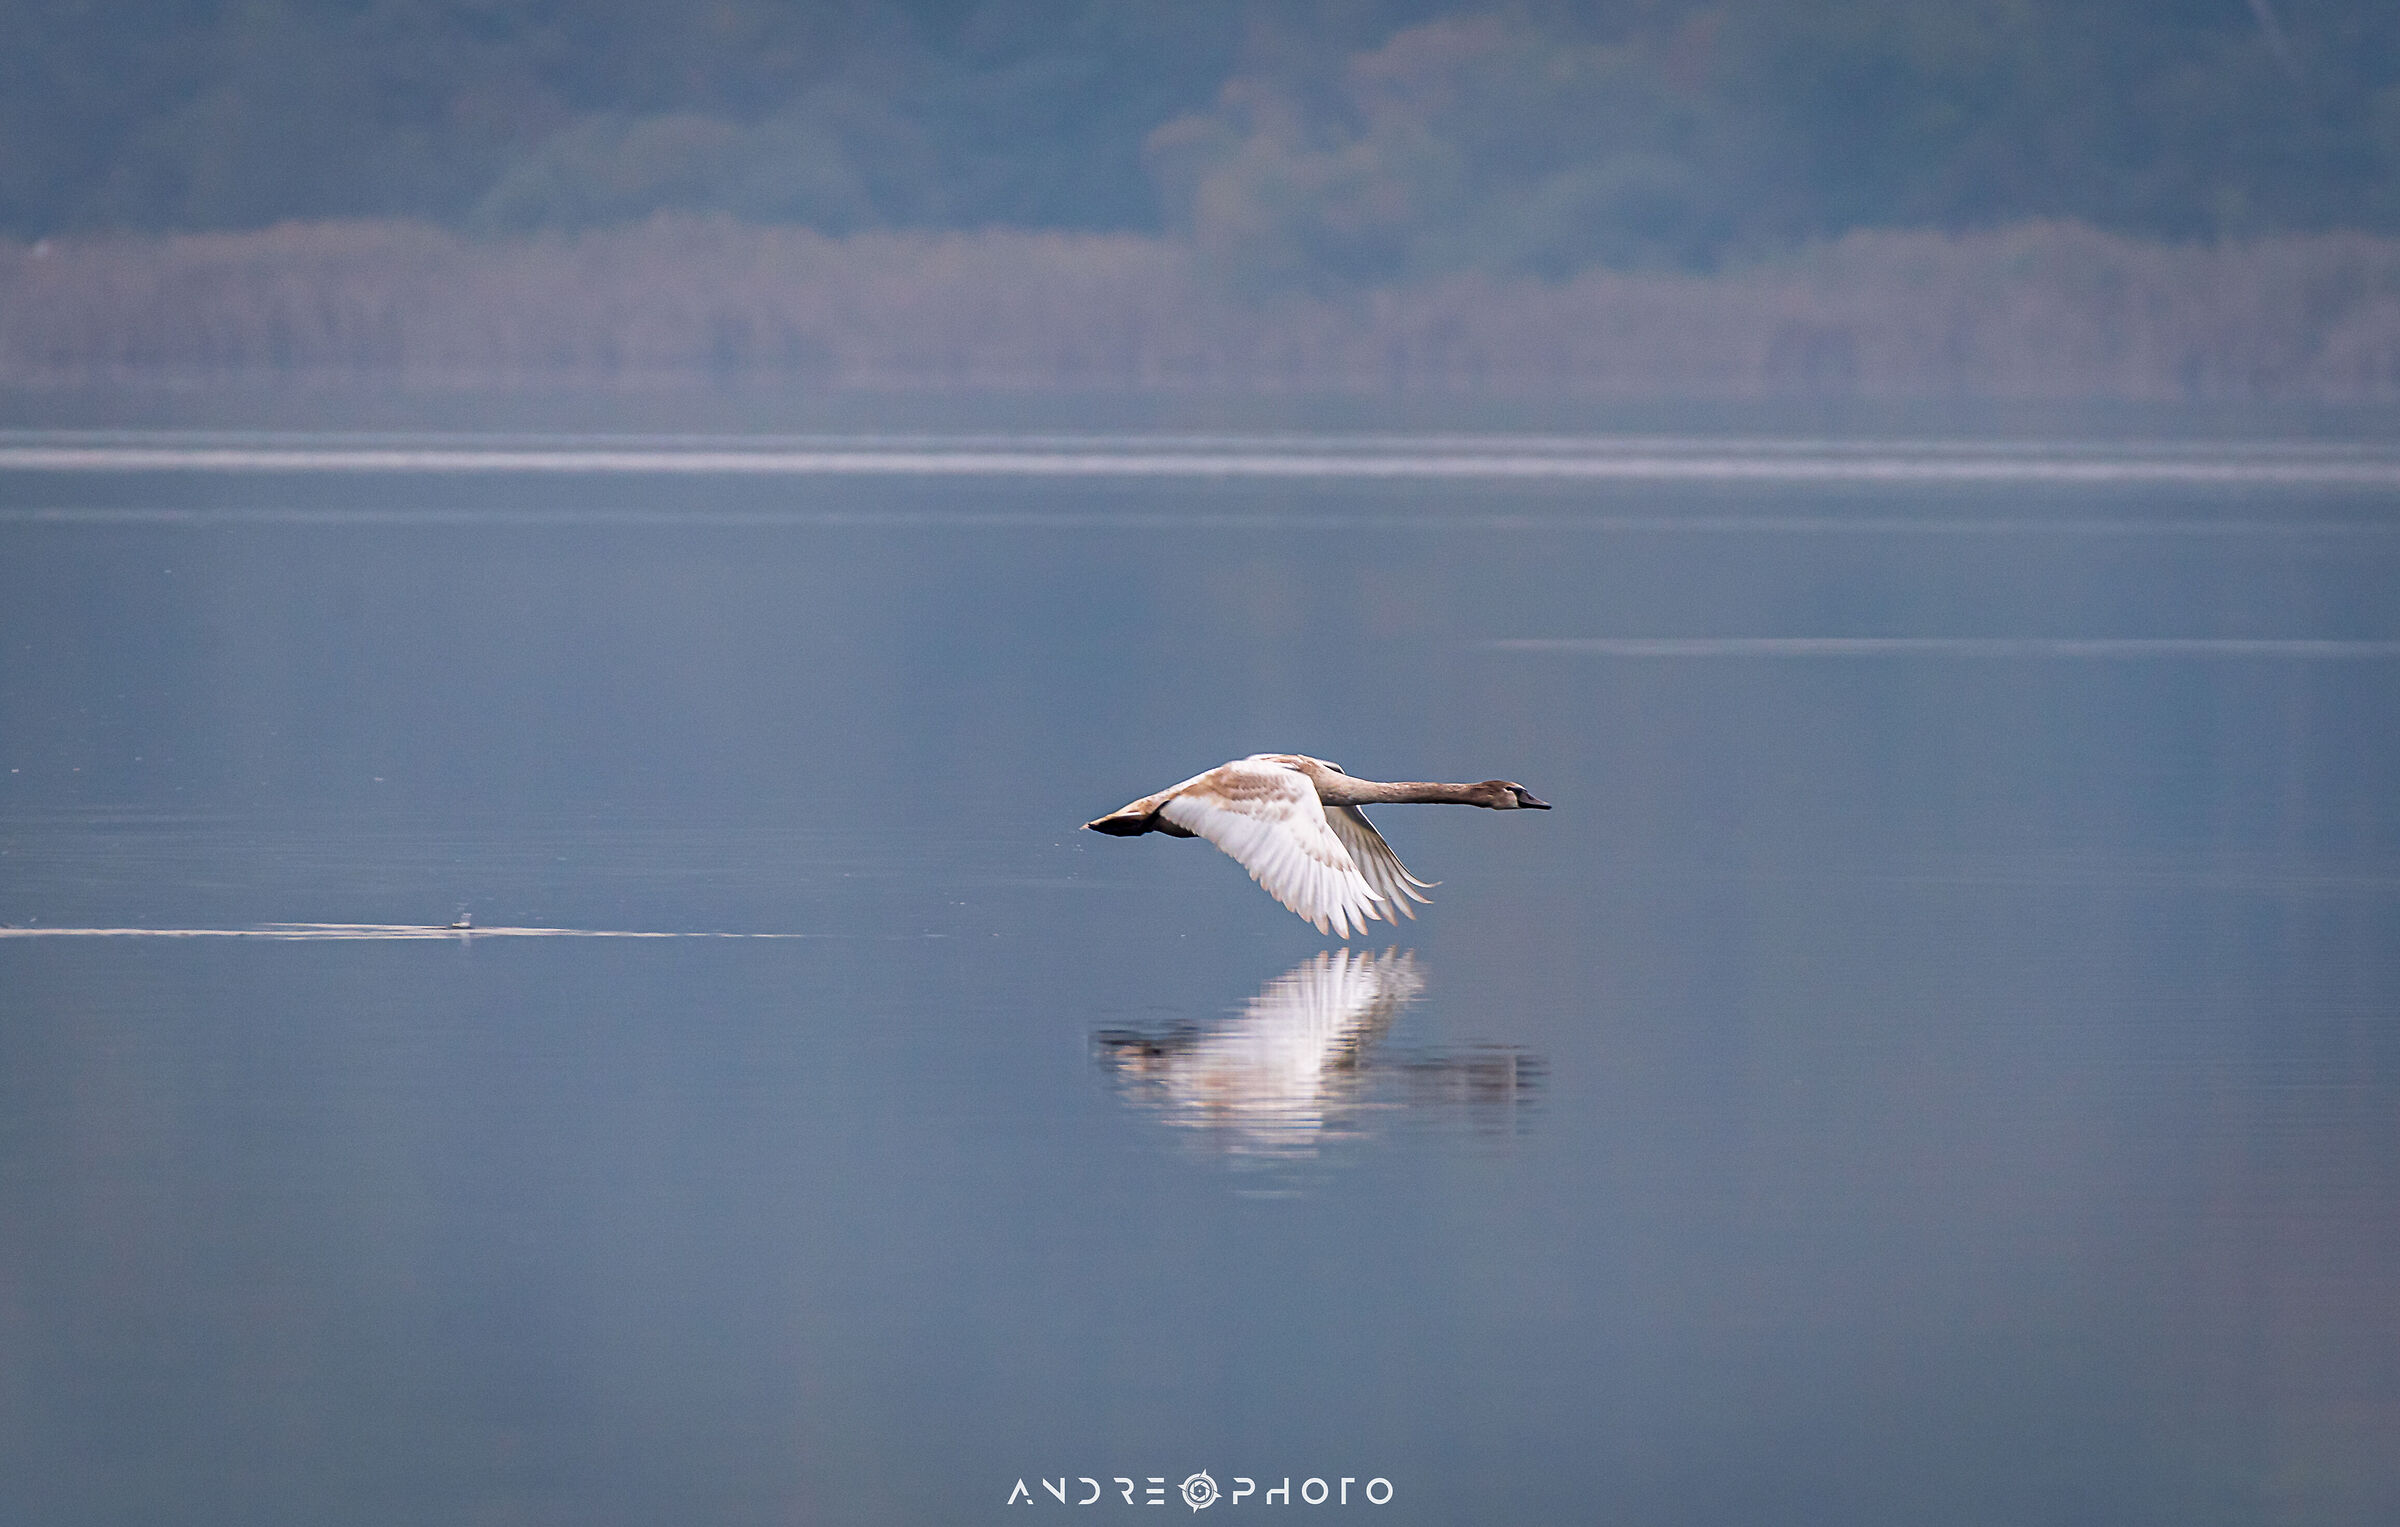 Young Swan in flight...